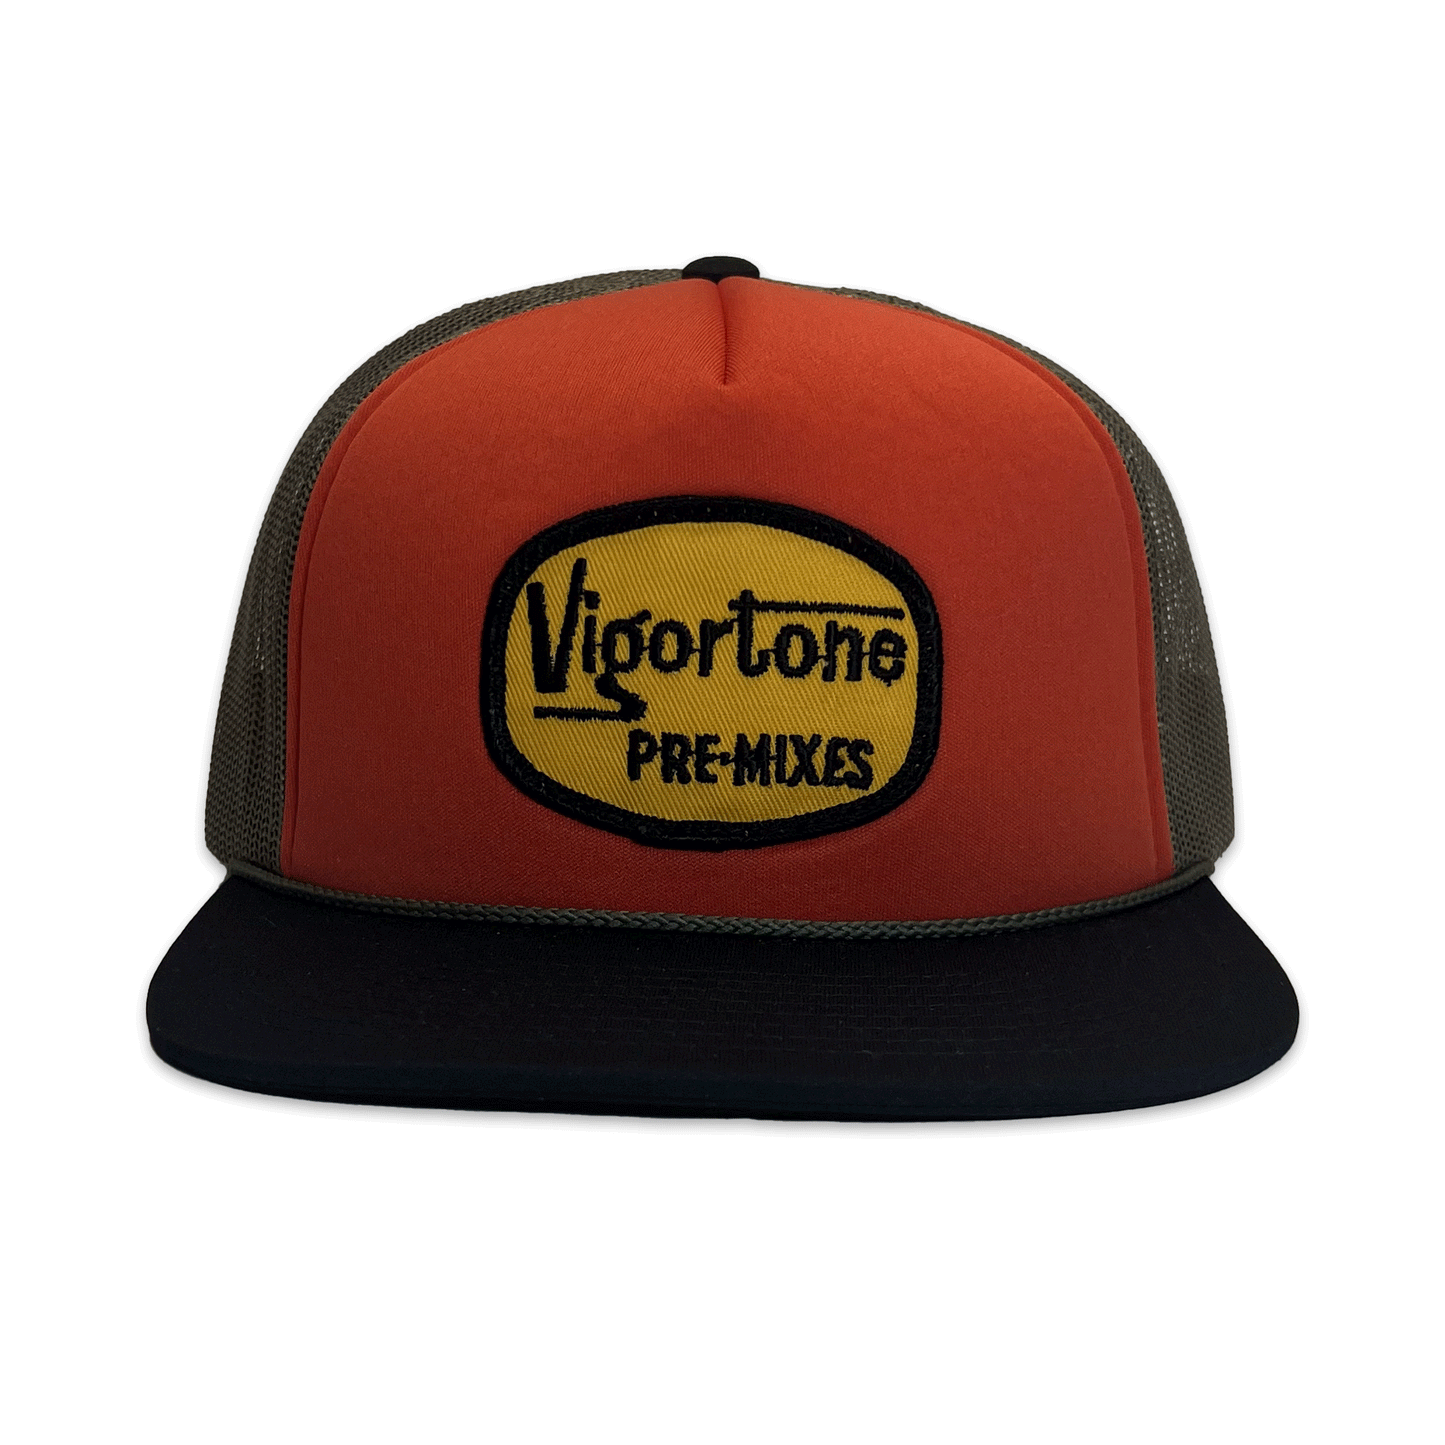 Vigortone. Hat. Dark Orange/Black/Green